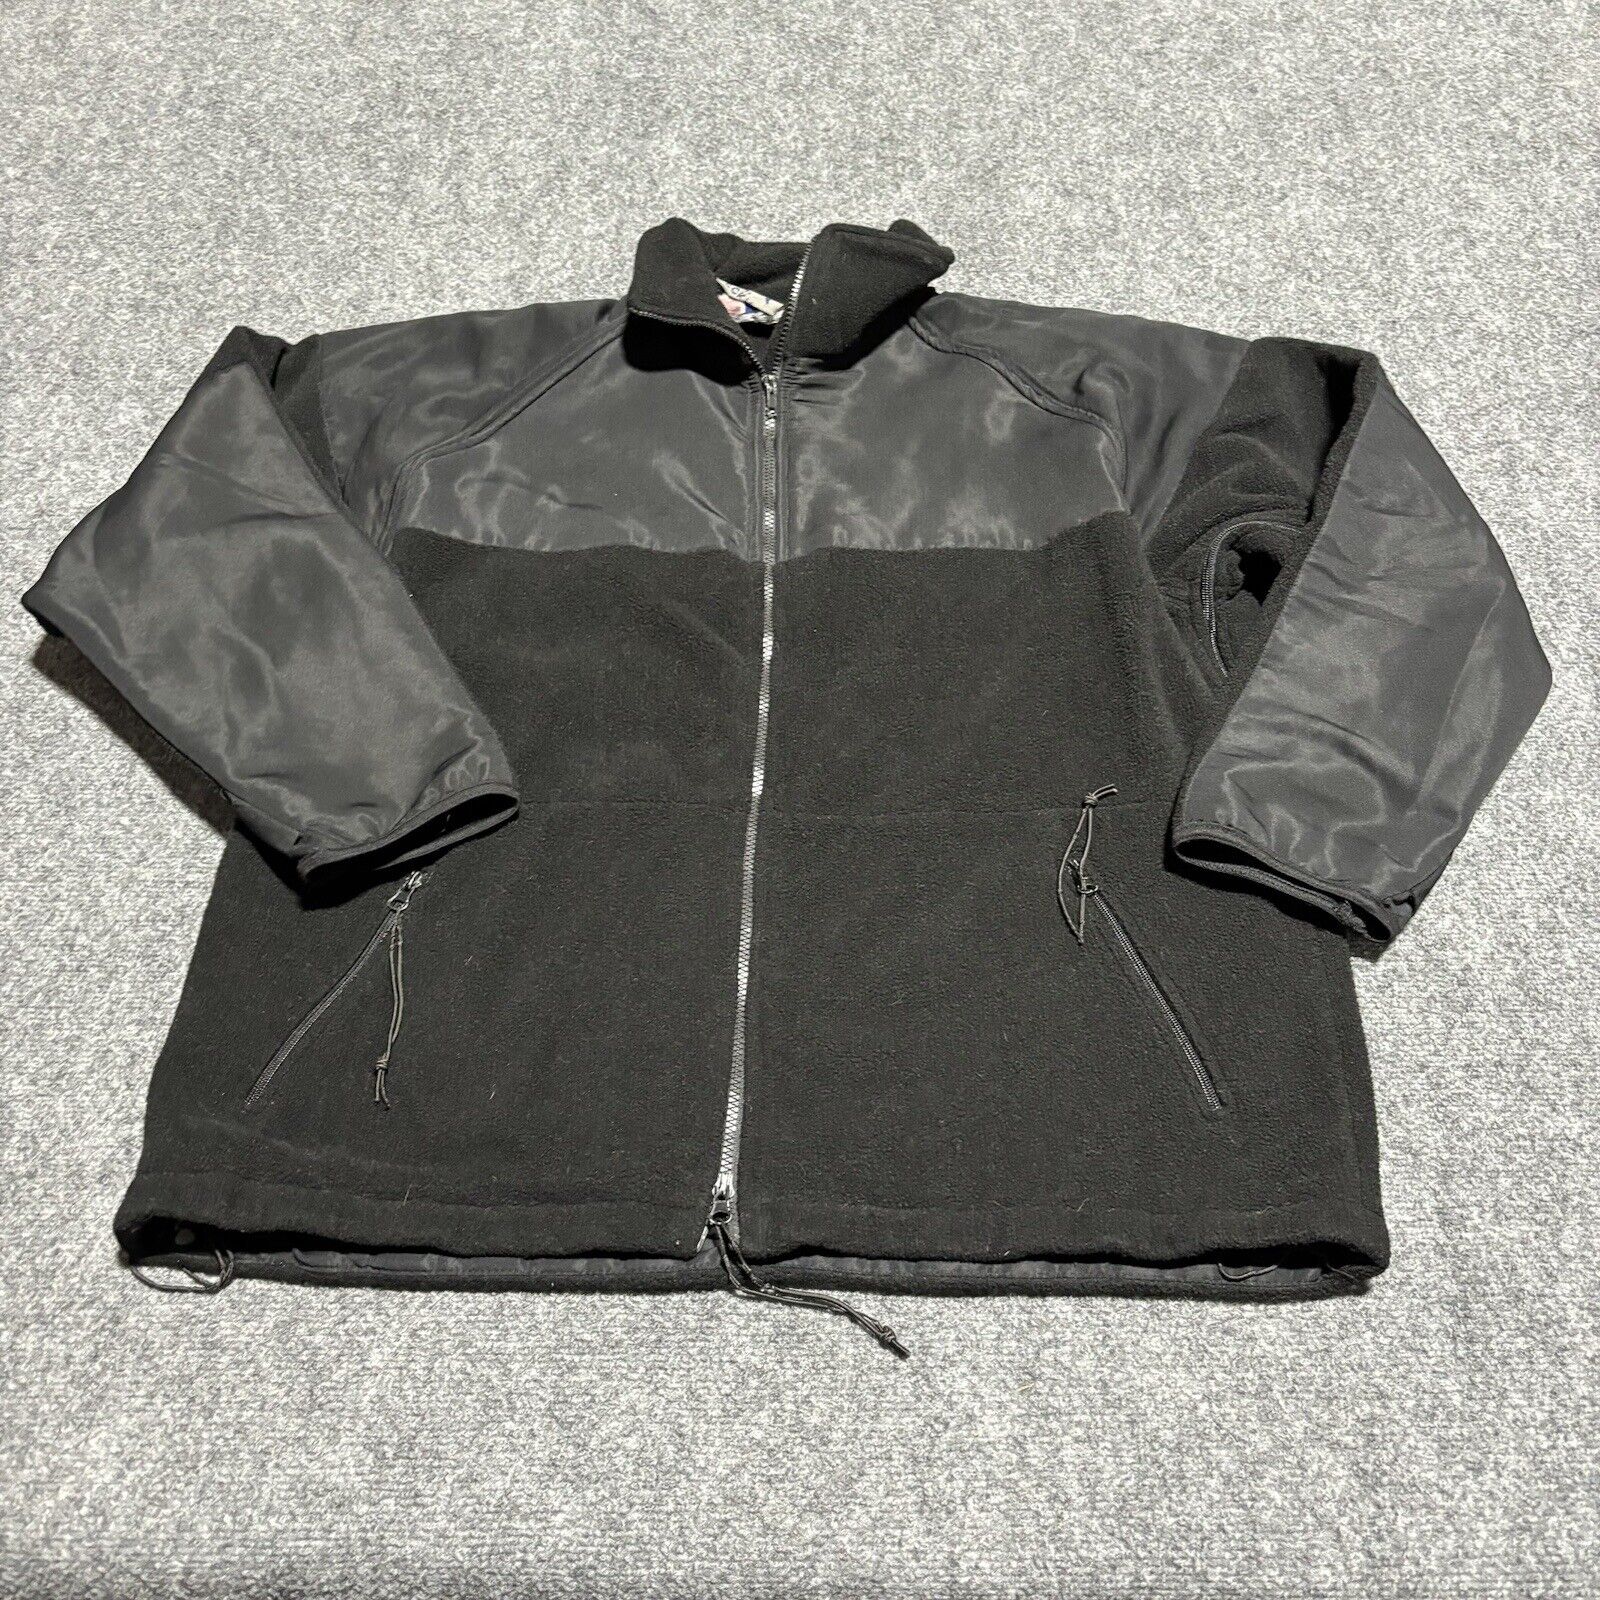 USGI Cold Weather Shirt Adult Large Black Fleece Full Zip Jacket Mens Polyester